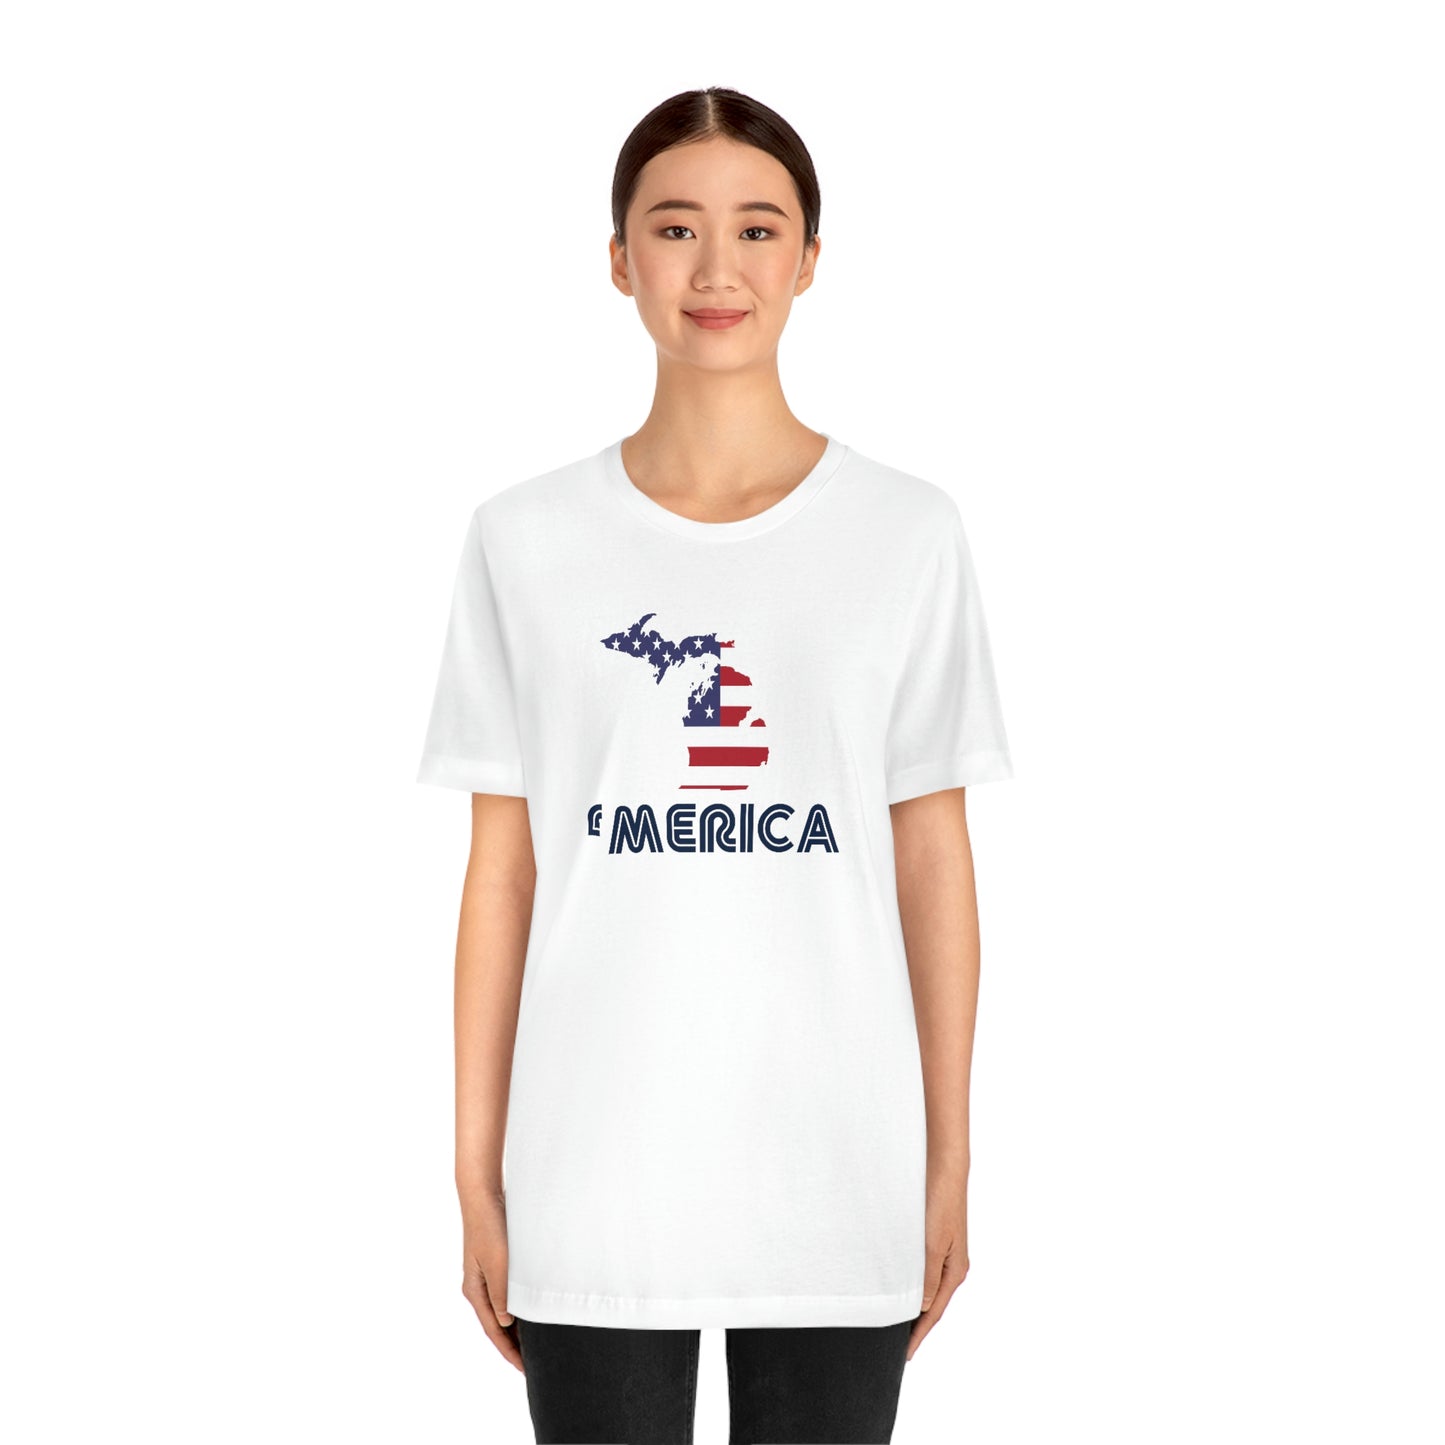 Michigan 'Merica' T-Shirt (Audiophile Font w/ MI USA Flag Outline) | Unisex Standard Fit